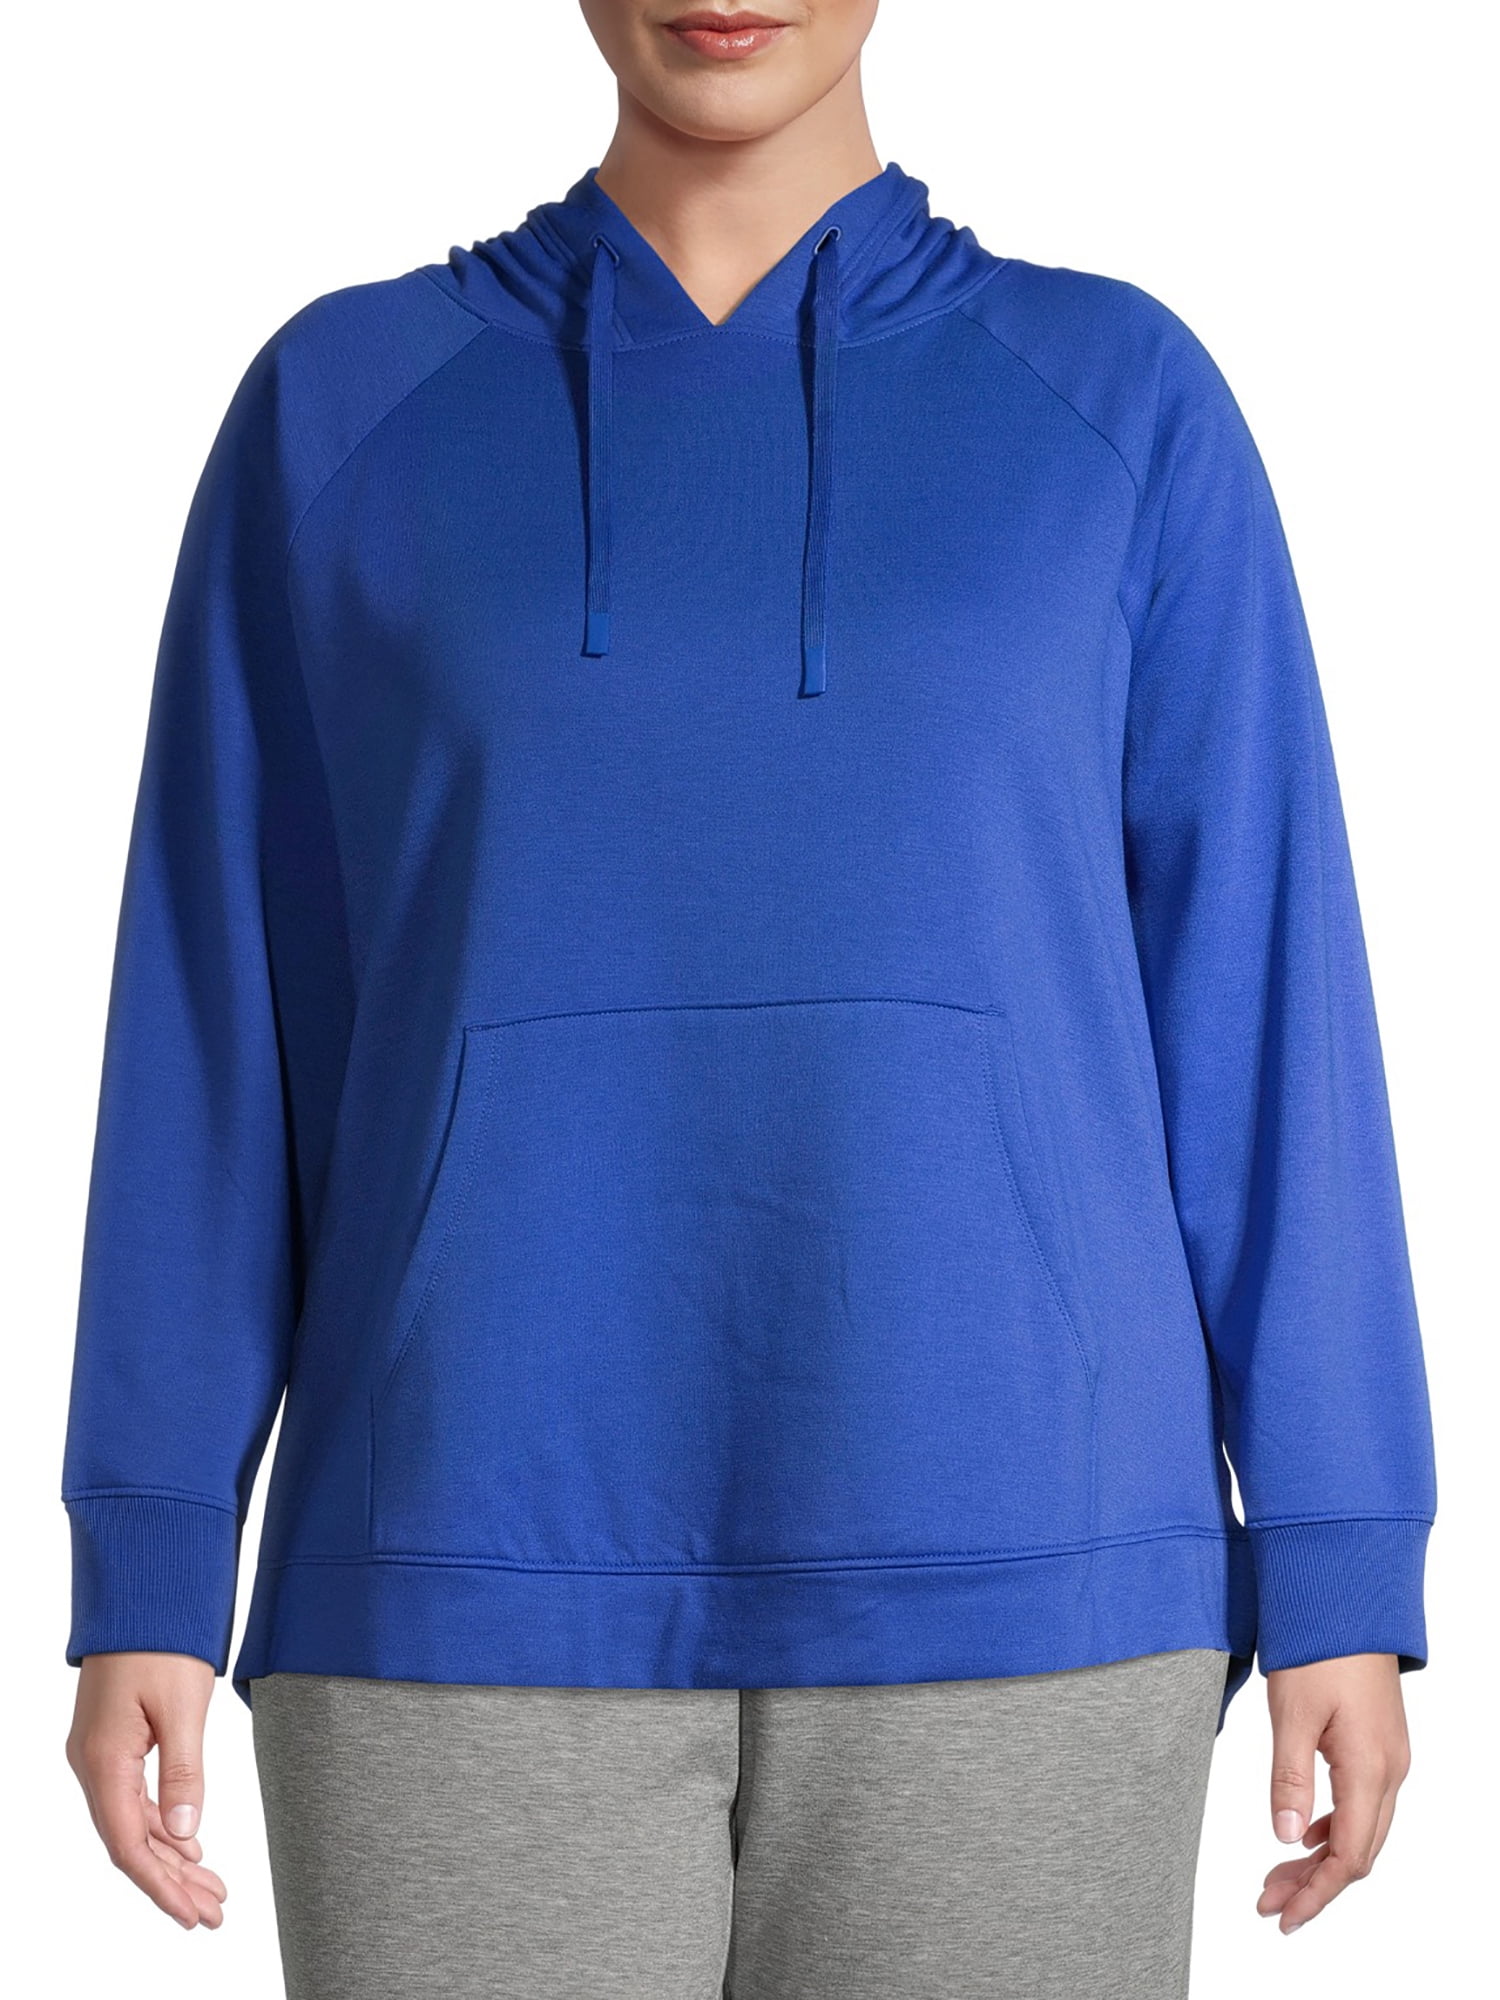 Athletic Works Women's Plus Size Soft Fleece Pullover Sweatshirt ...